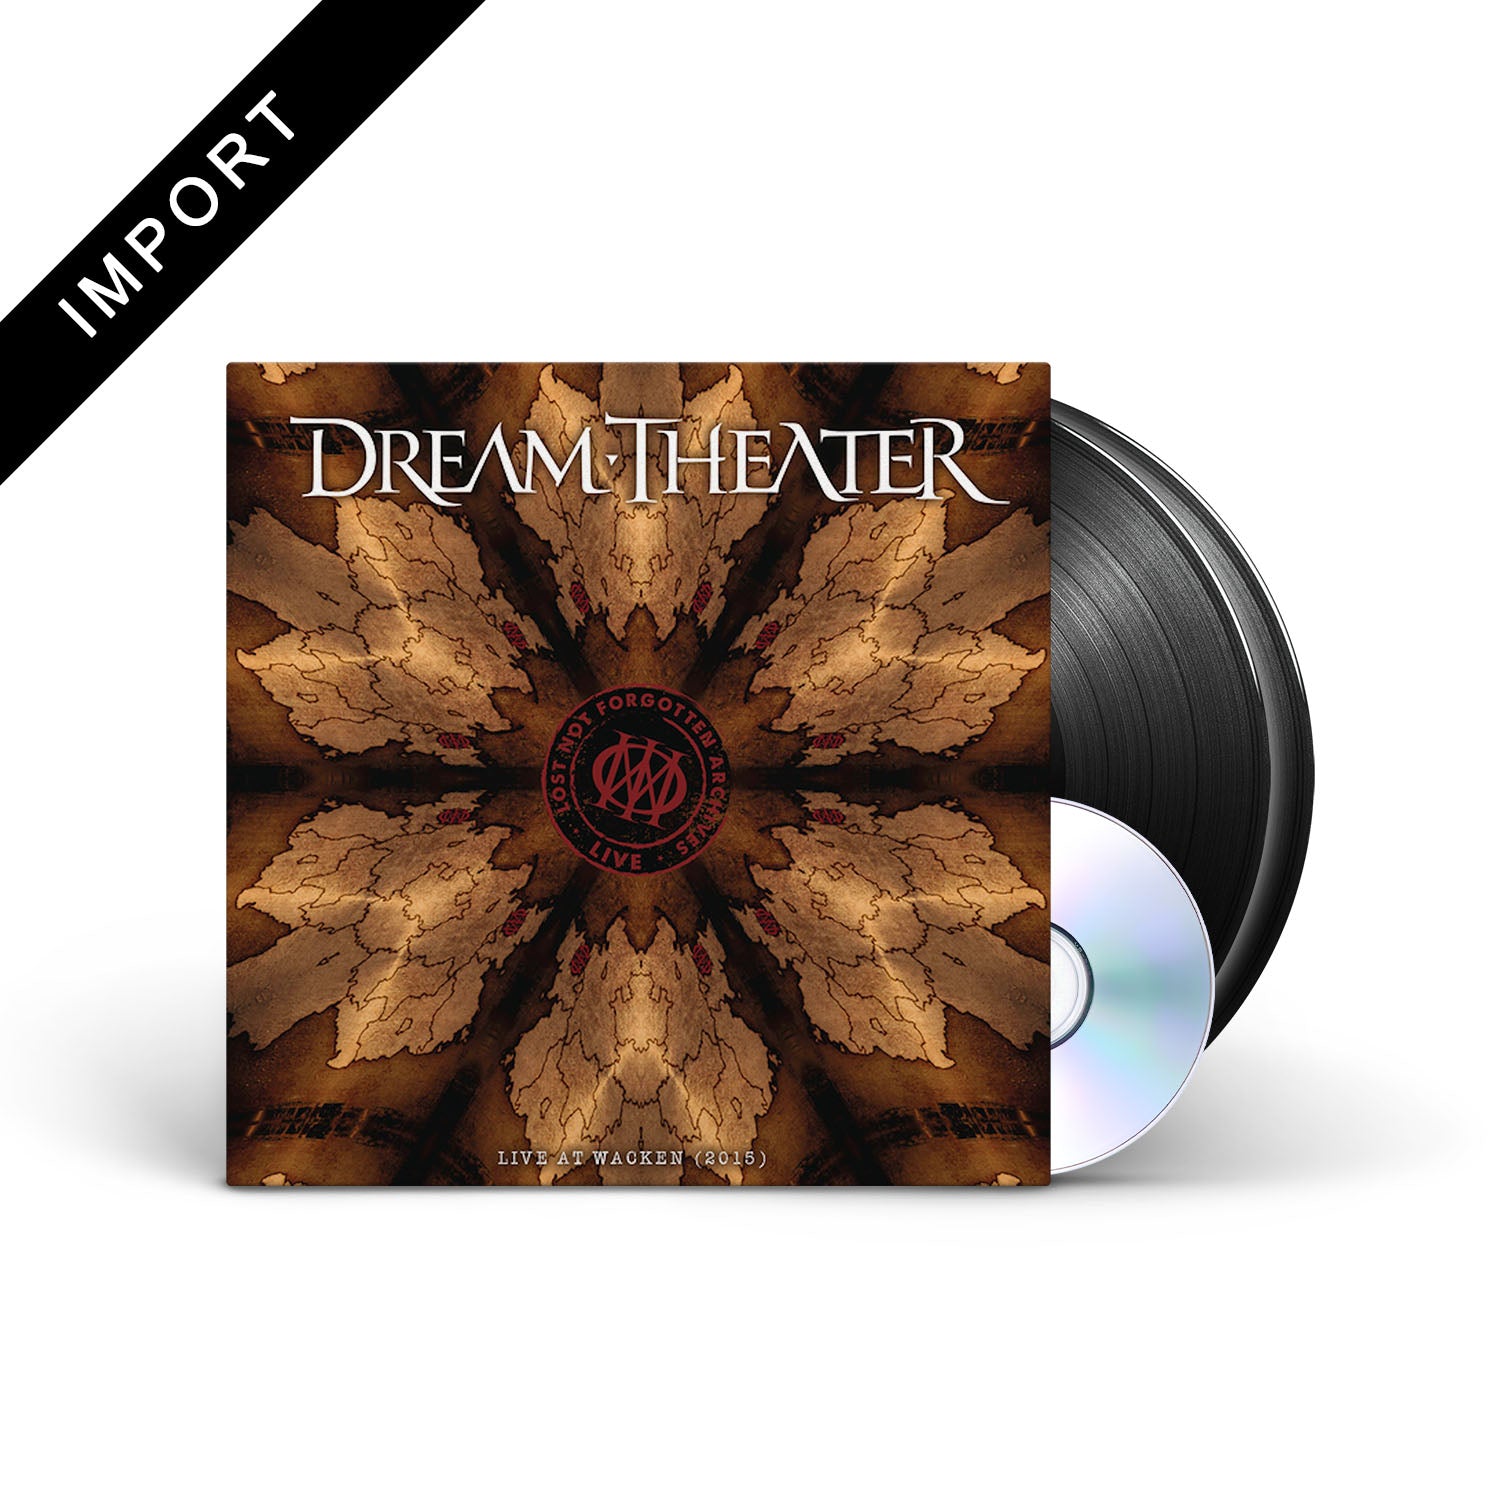 DREAM THEATER - Lost Not Forgotten Archives: Live at Wacken (2015) - 2xLP + CD